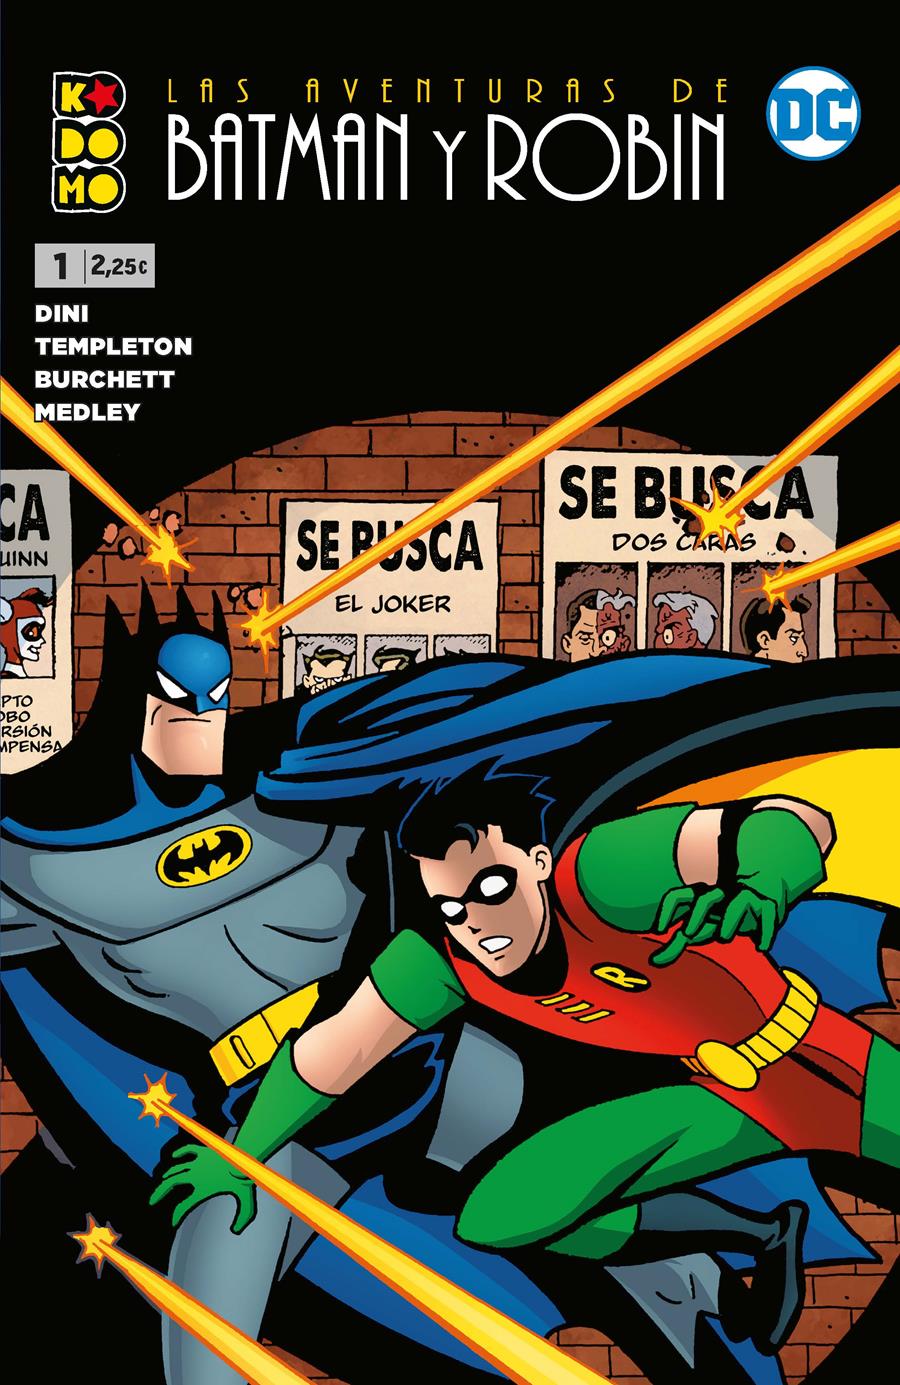 Las aventuras de Batman y Robin núm. 01 | N0322-ECC55 | Paul Dini / Ty Templeton | Terra de Còmic - Tu tienda de cómics online especializada en cómics, manga y merchandising